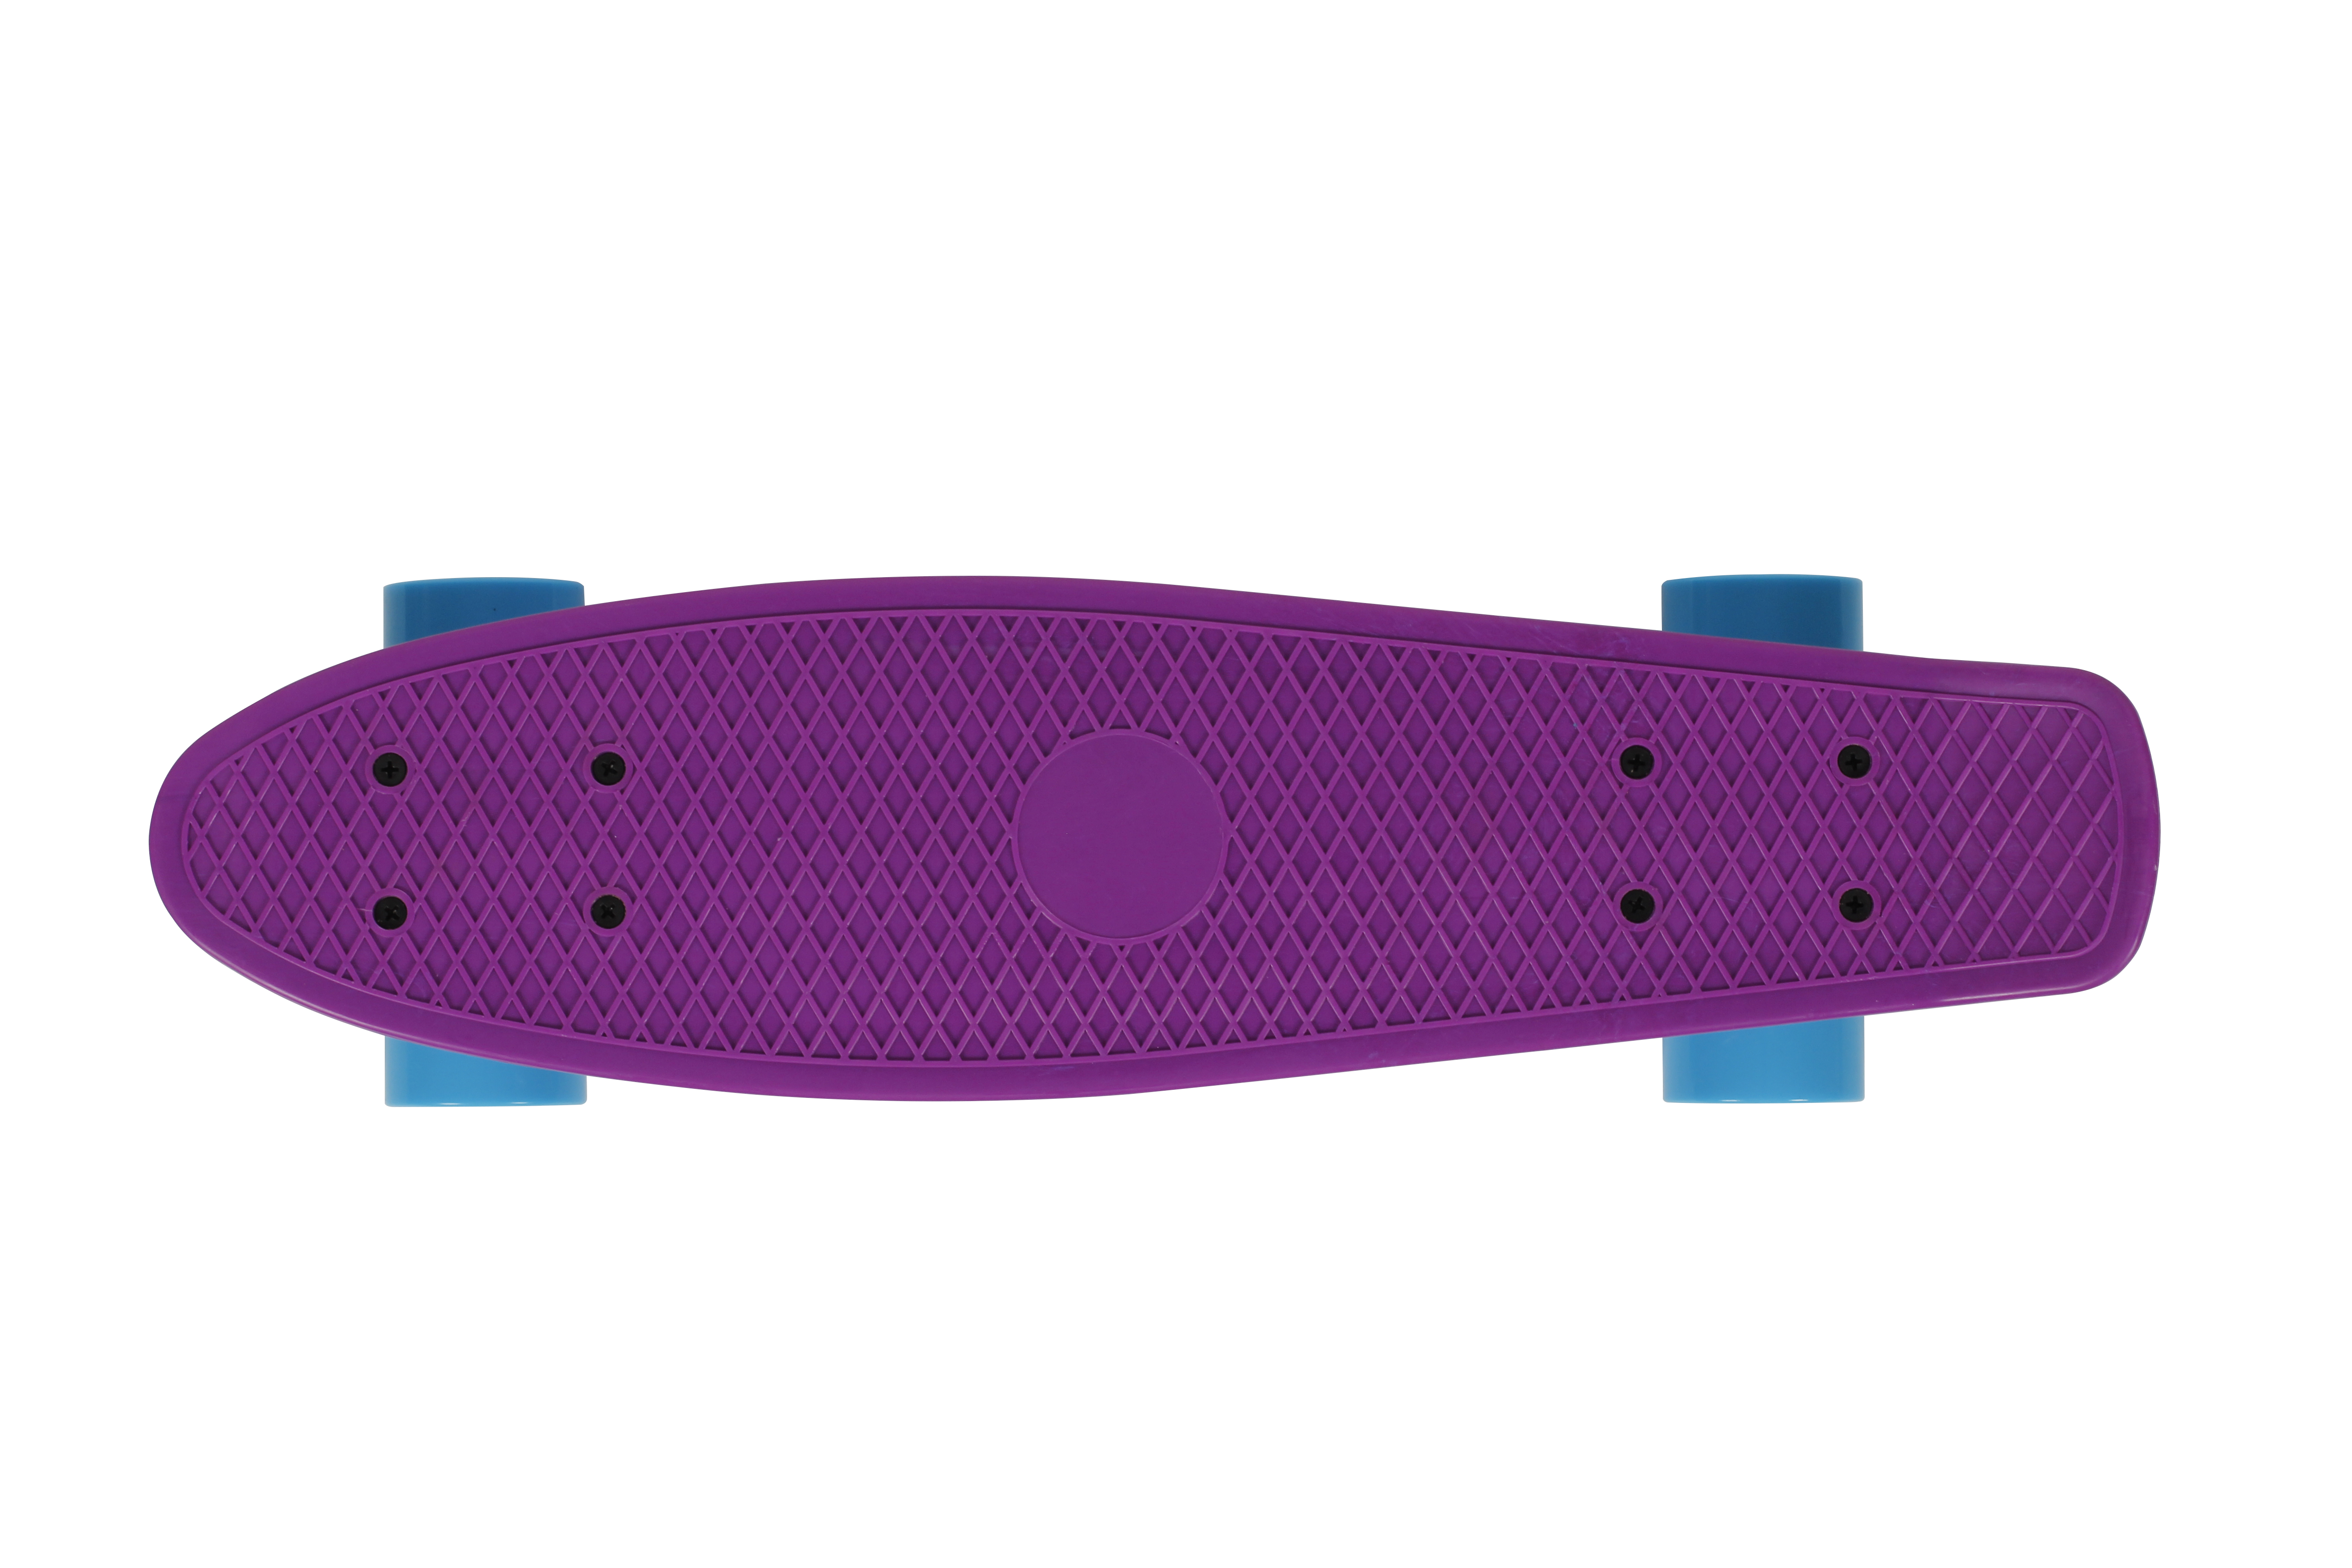 Chrome Skateboard 22" Cruiser Board ABEC 7 Ruote Skate Board PONTE COMPLETO 